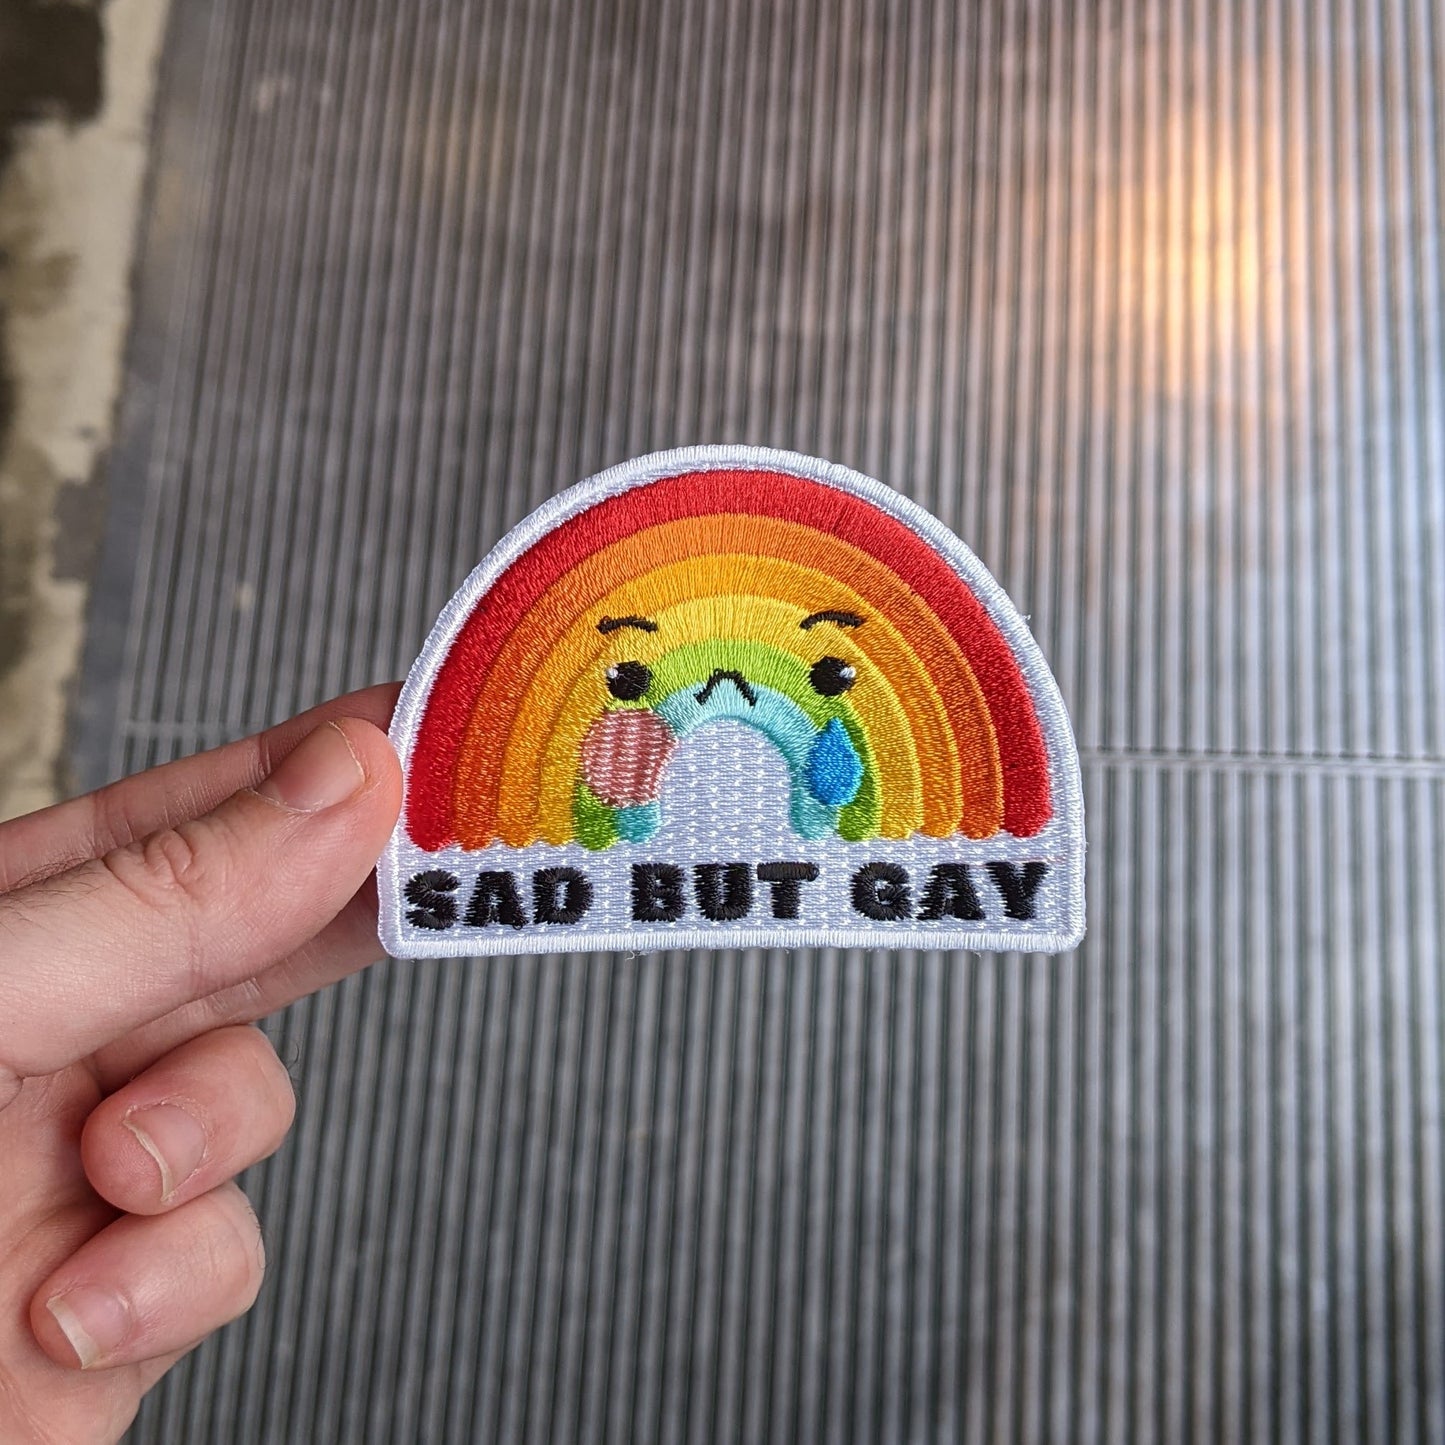 Sad but Gay | Patch